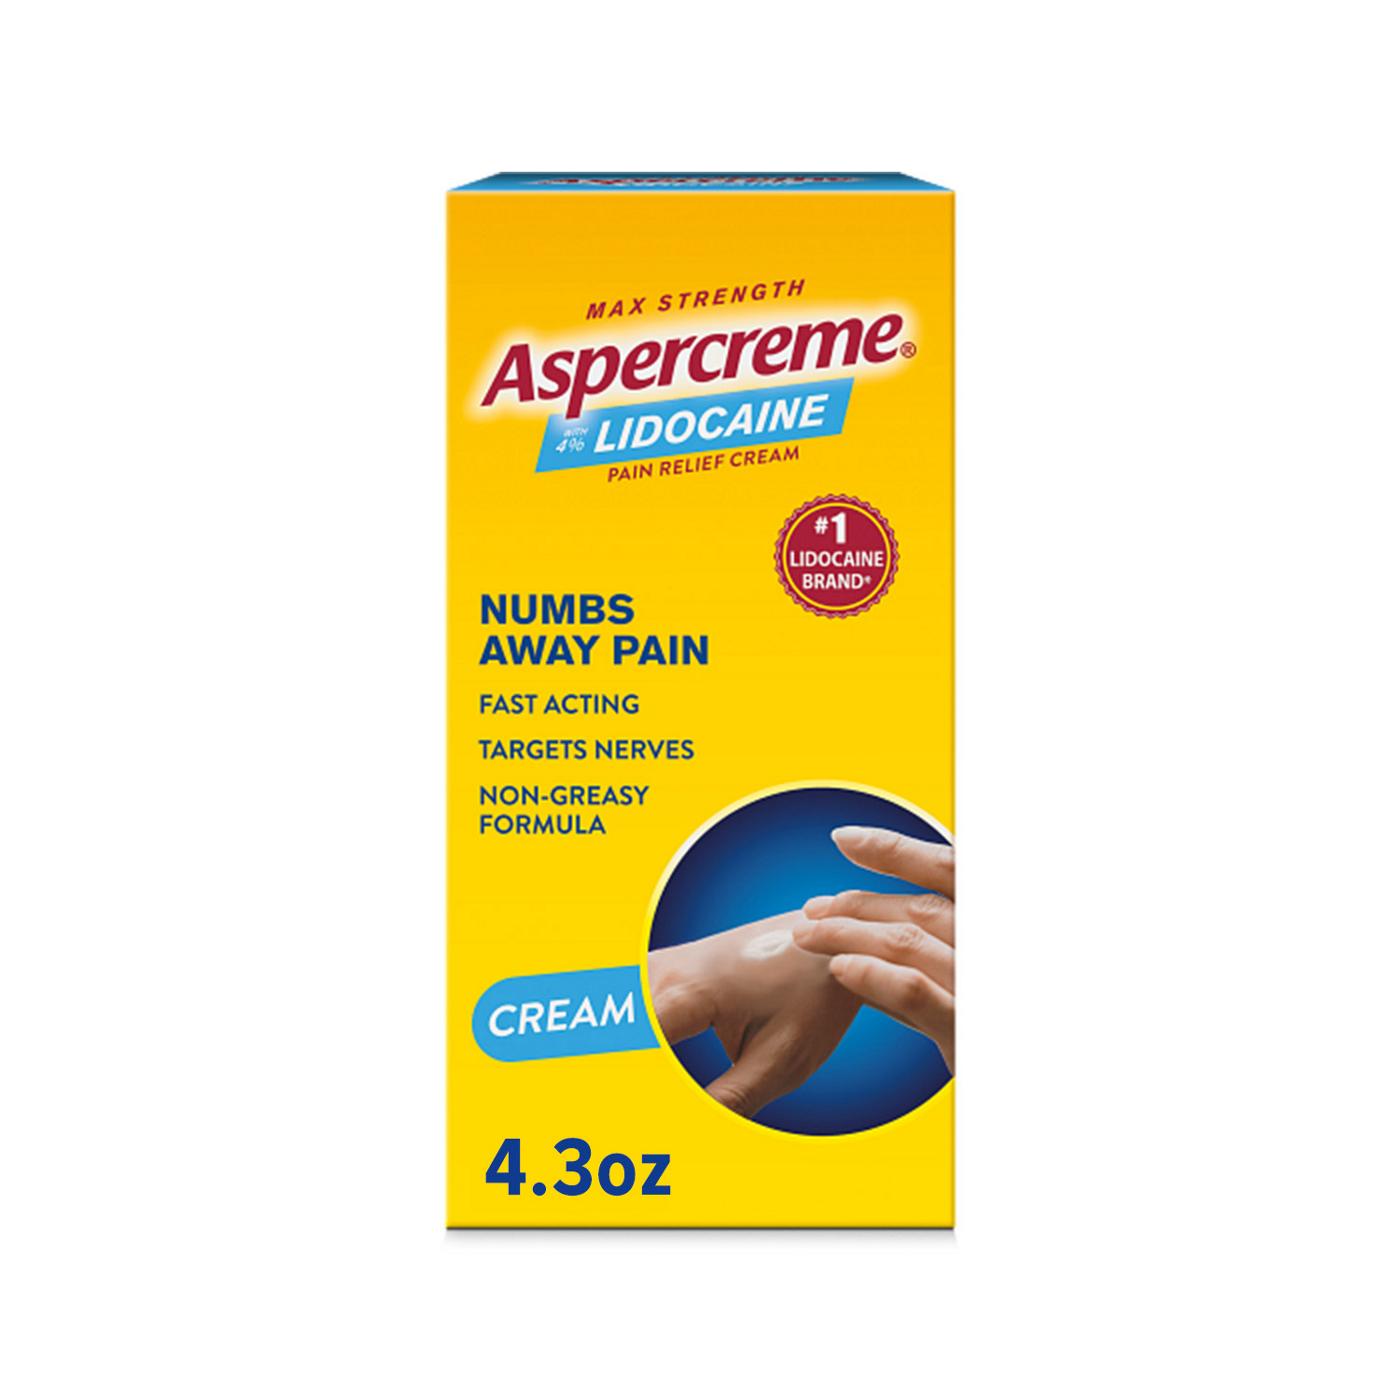 Aspercreme Lidocaine Pain Relief Cream; image 1 of 6